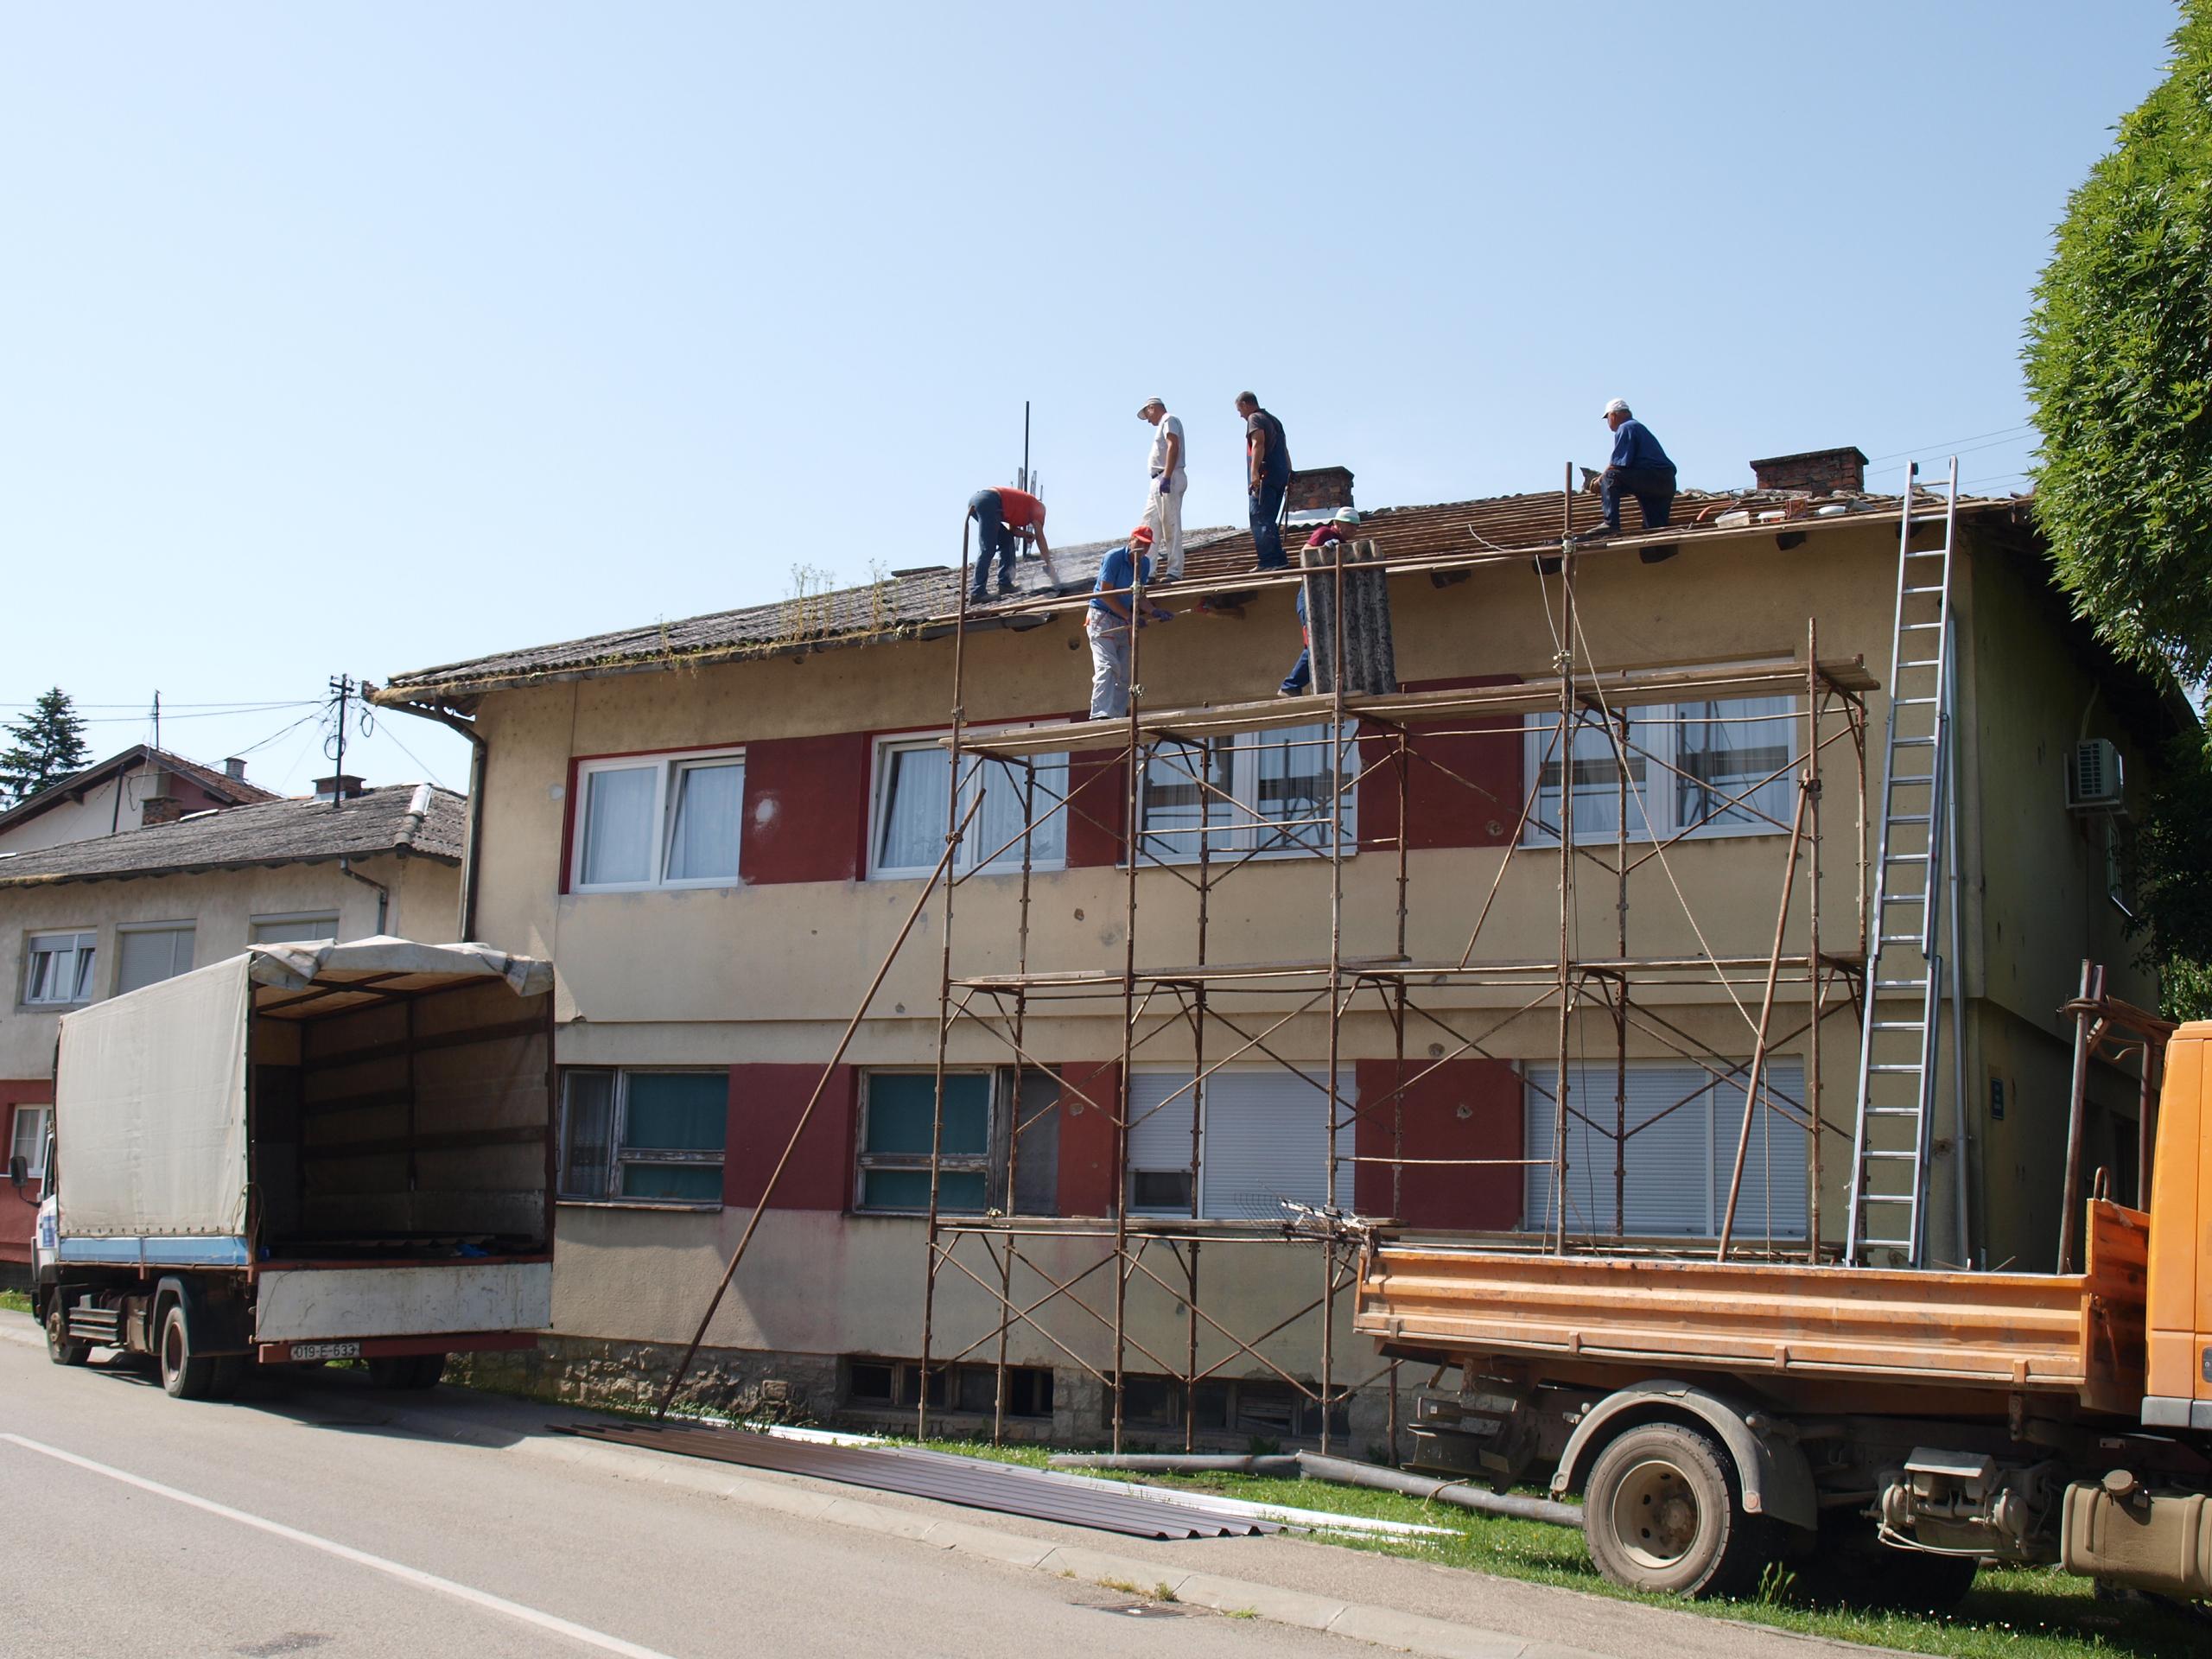 Radovi u Bosanskoj Gradišci: Skidanje polovine azbestnog krova - Avaz